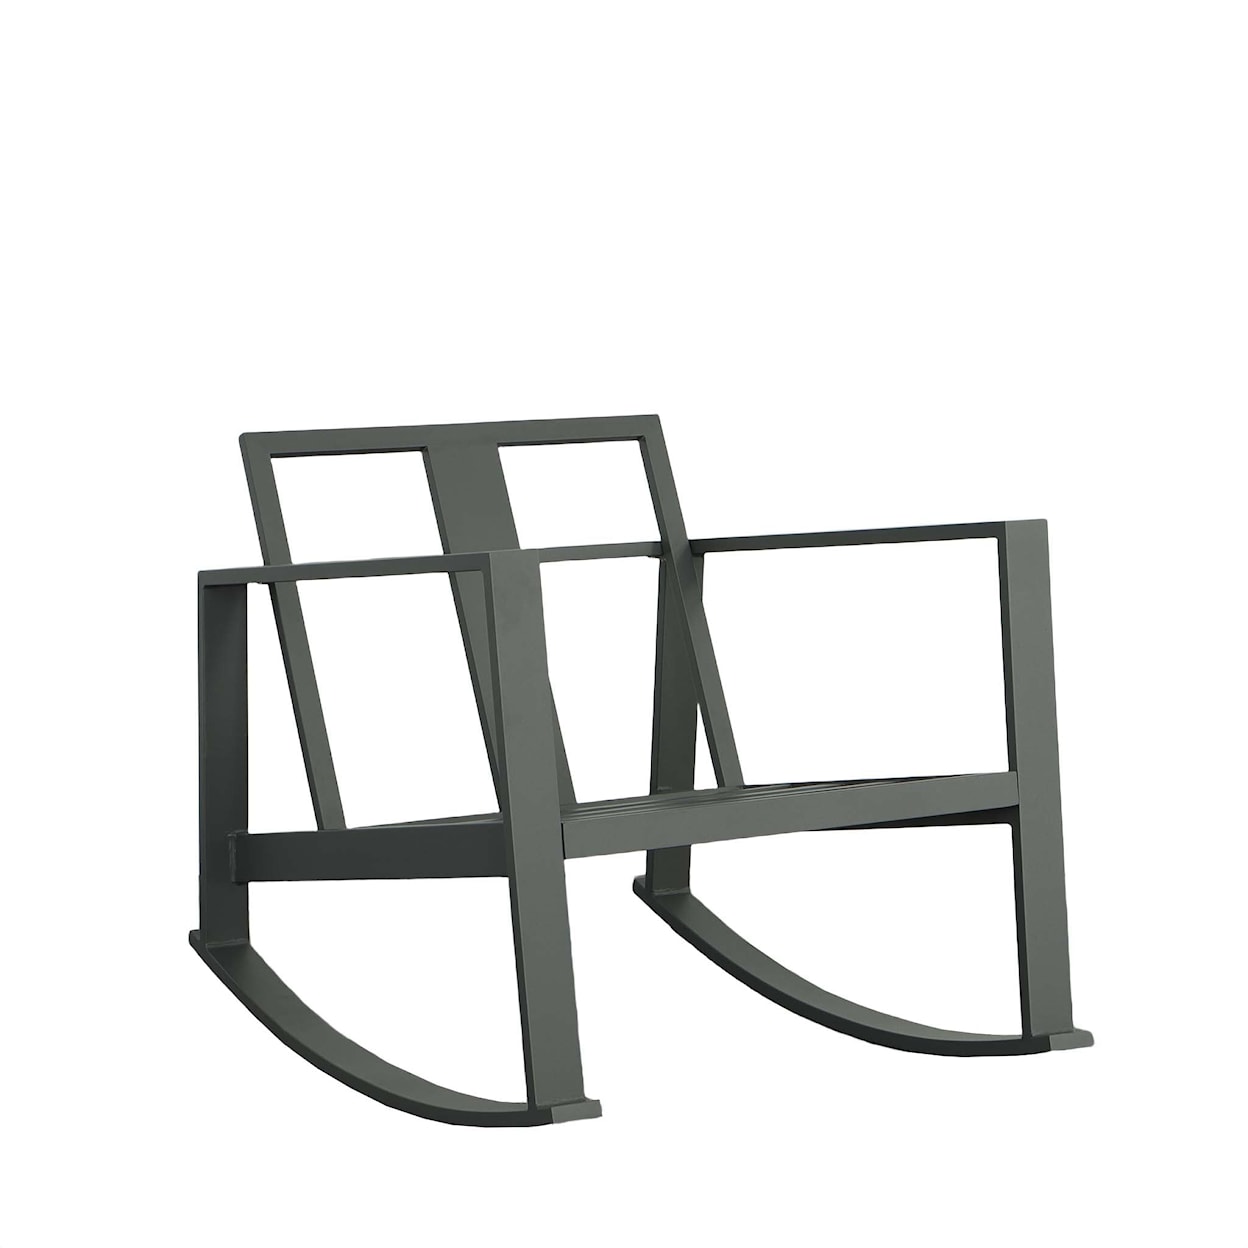 Progressive Furniture Edgewater Outdoor Rocker Chair